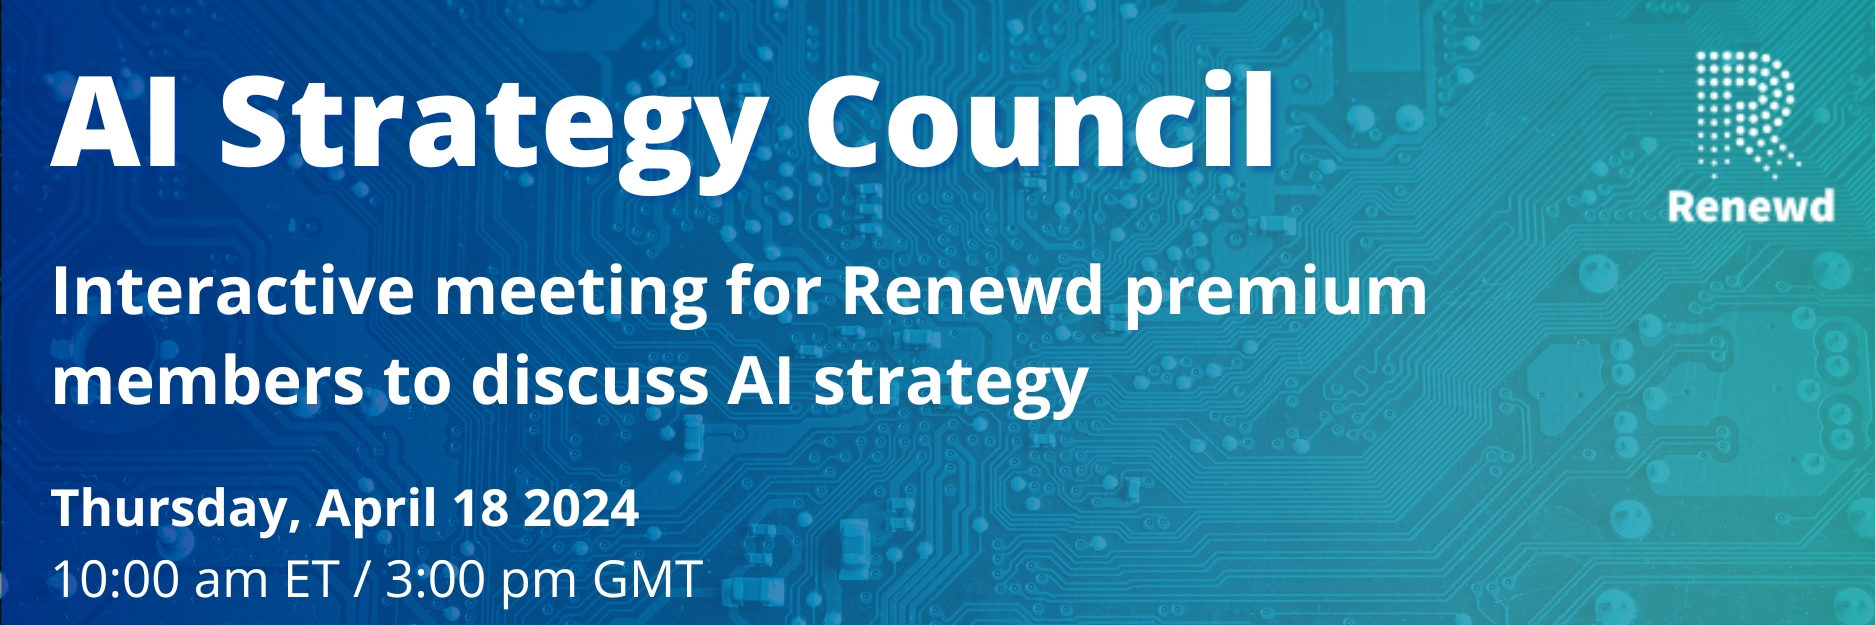 AI Strategy Council Meeting April